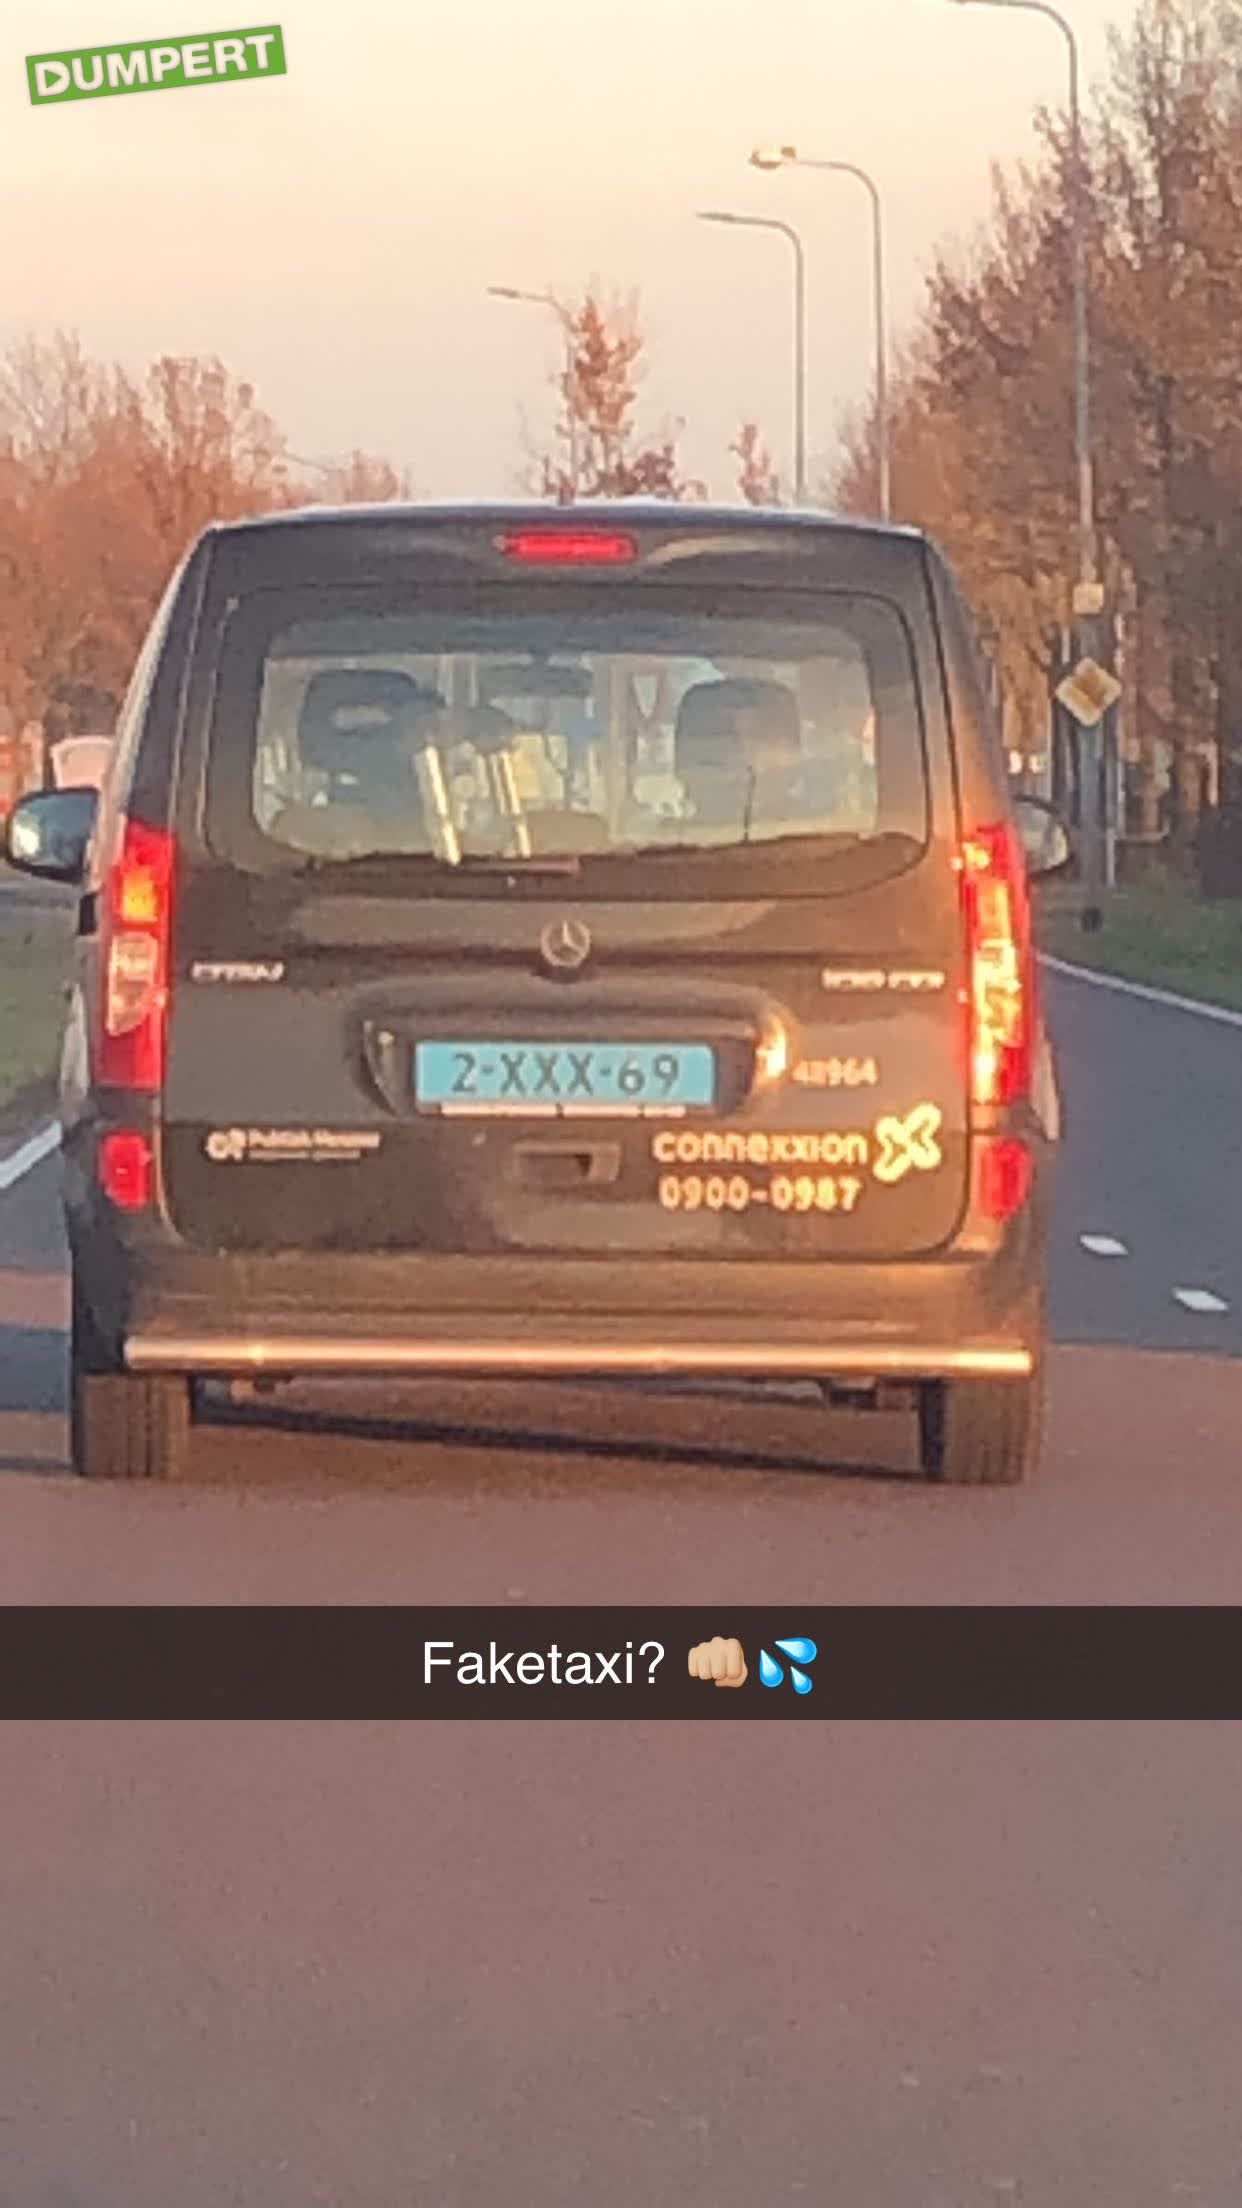 Fake Taxi?